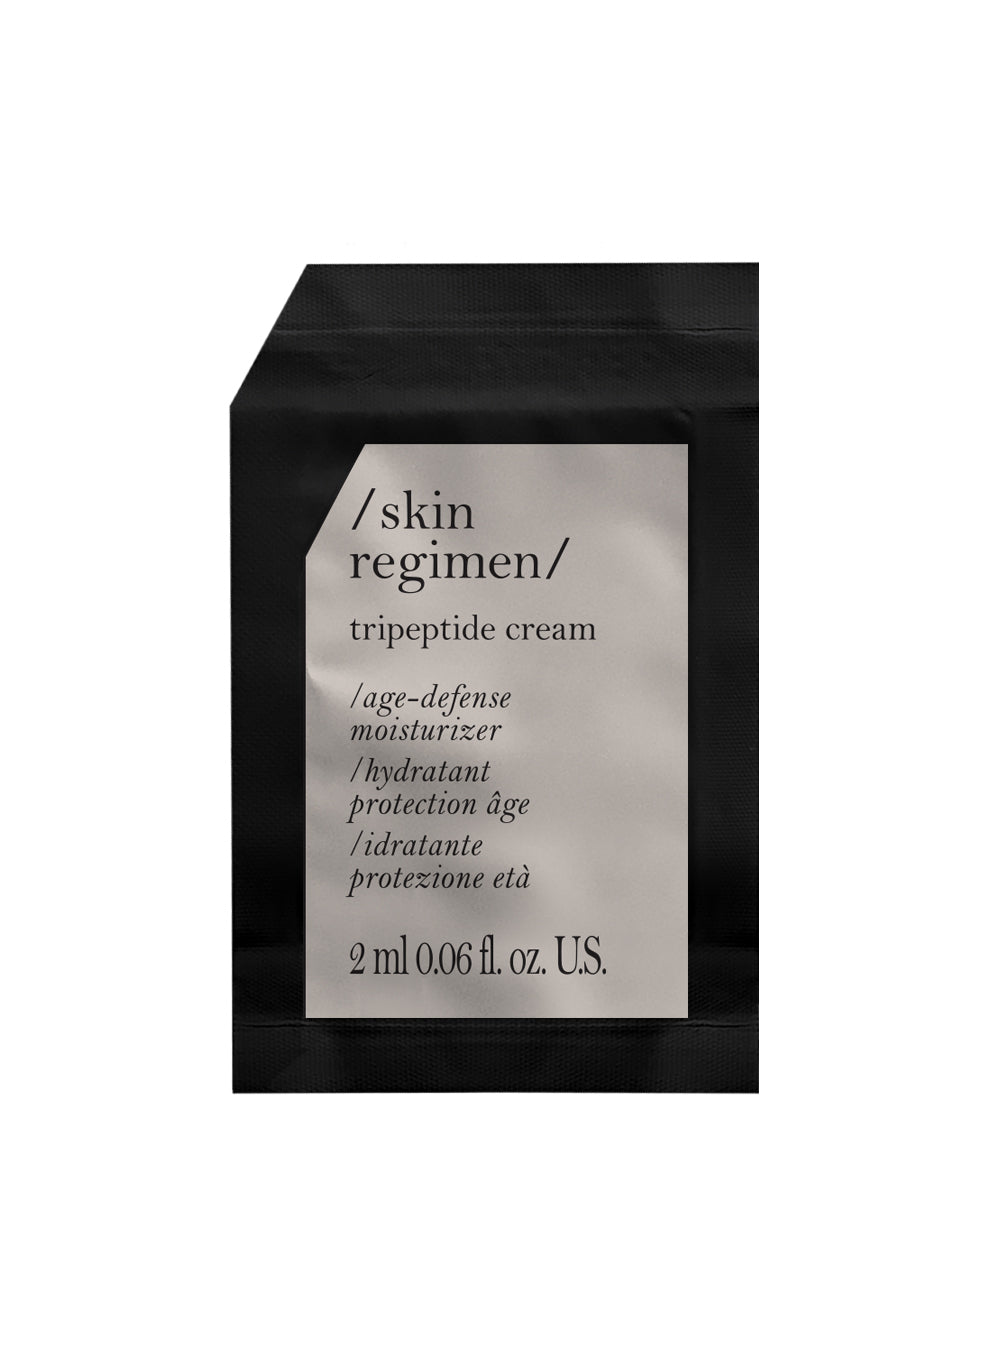 Comfort Zone: sachet /skin regimen/ Tripeptide Cream Age-defense anti-pollution moisturizer-
